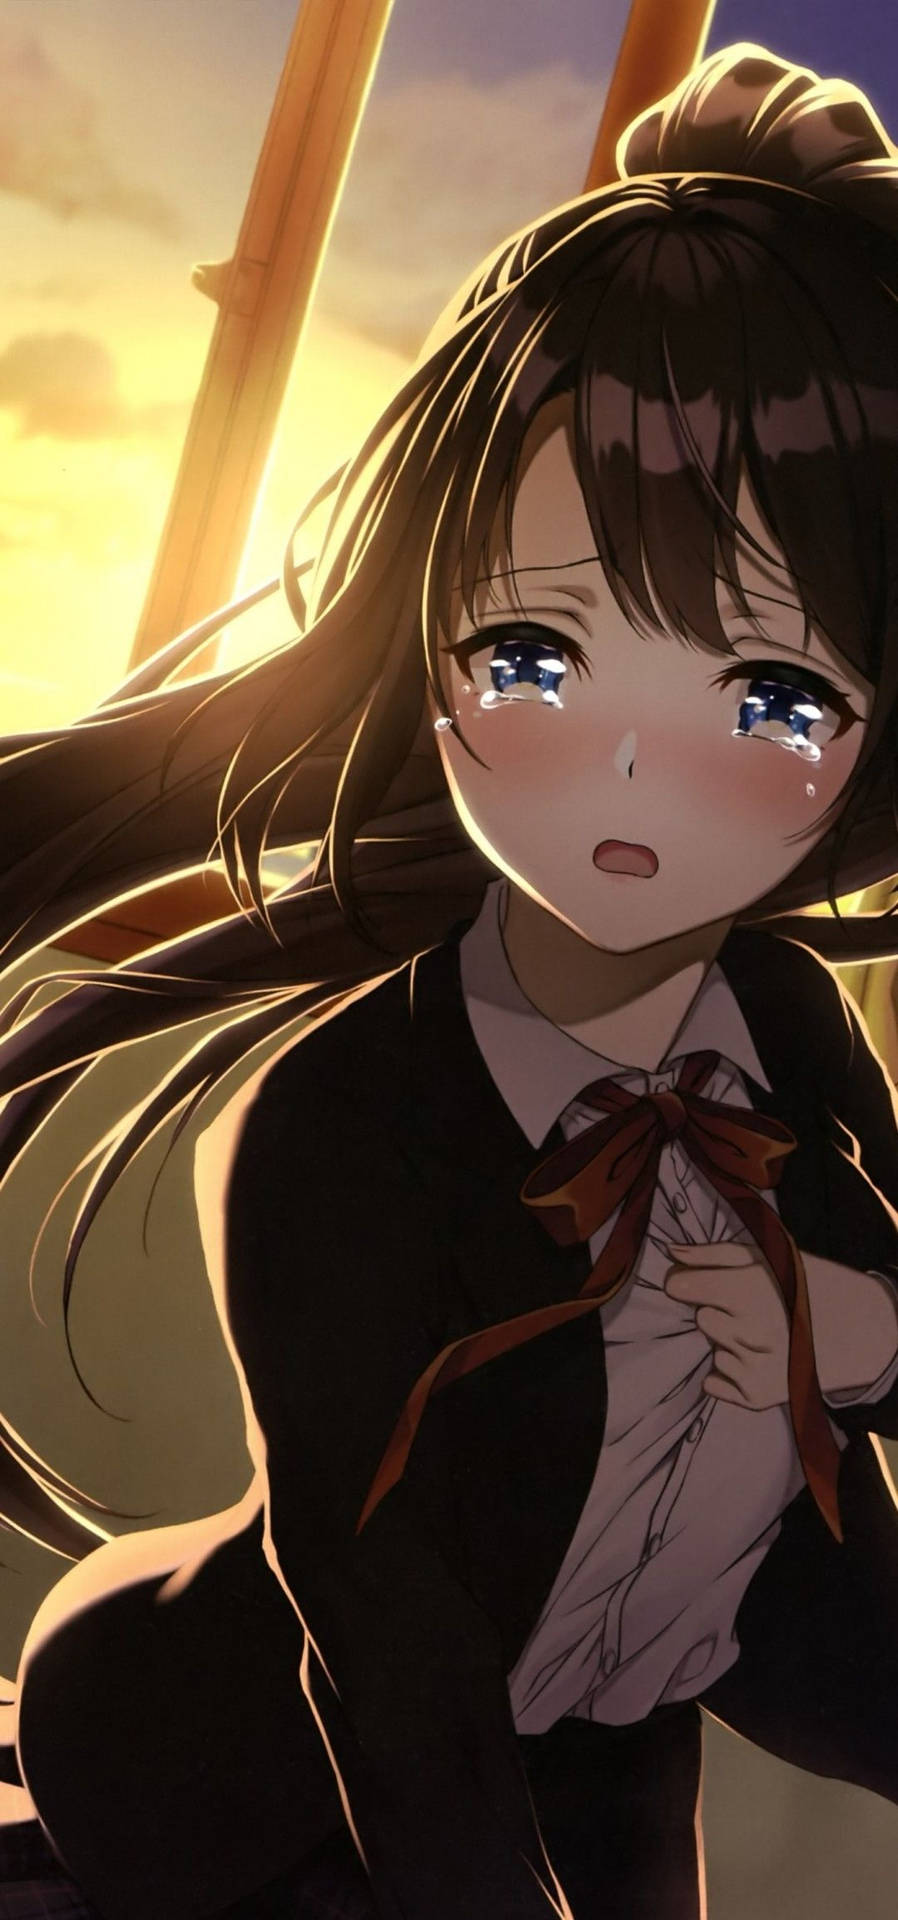 Crying Sad Anime Girl Student Background